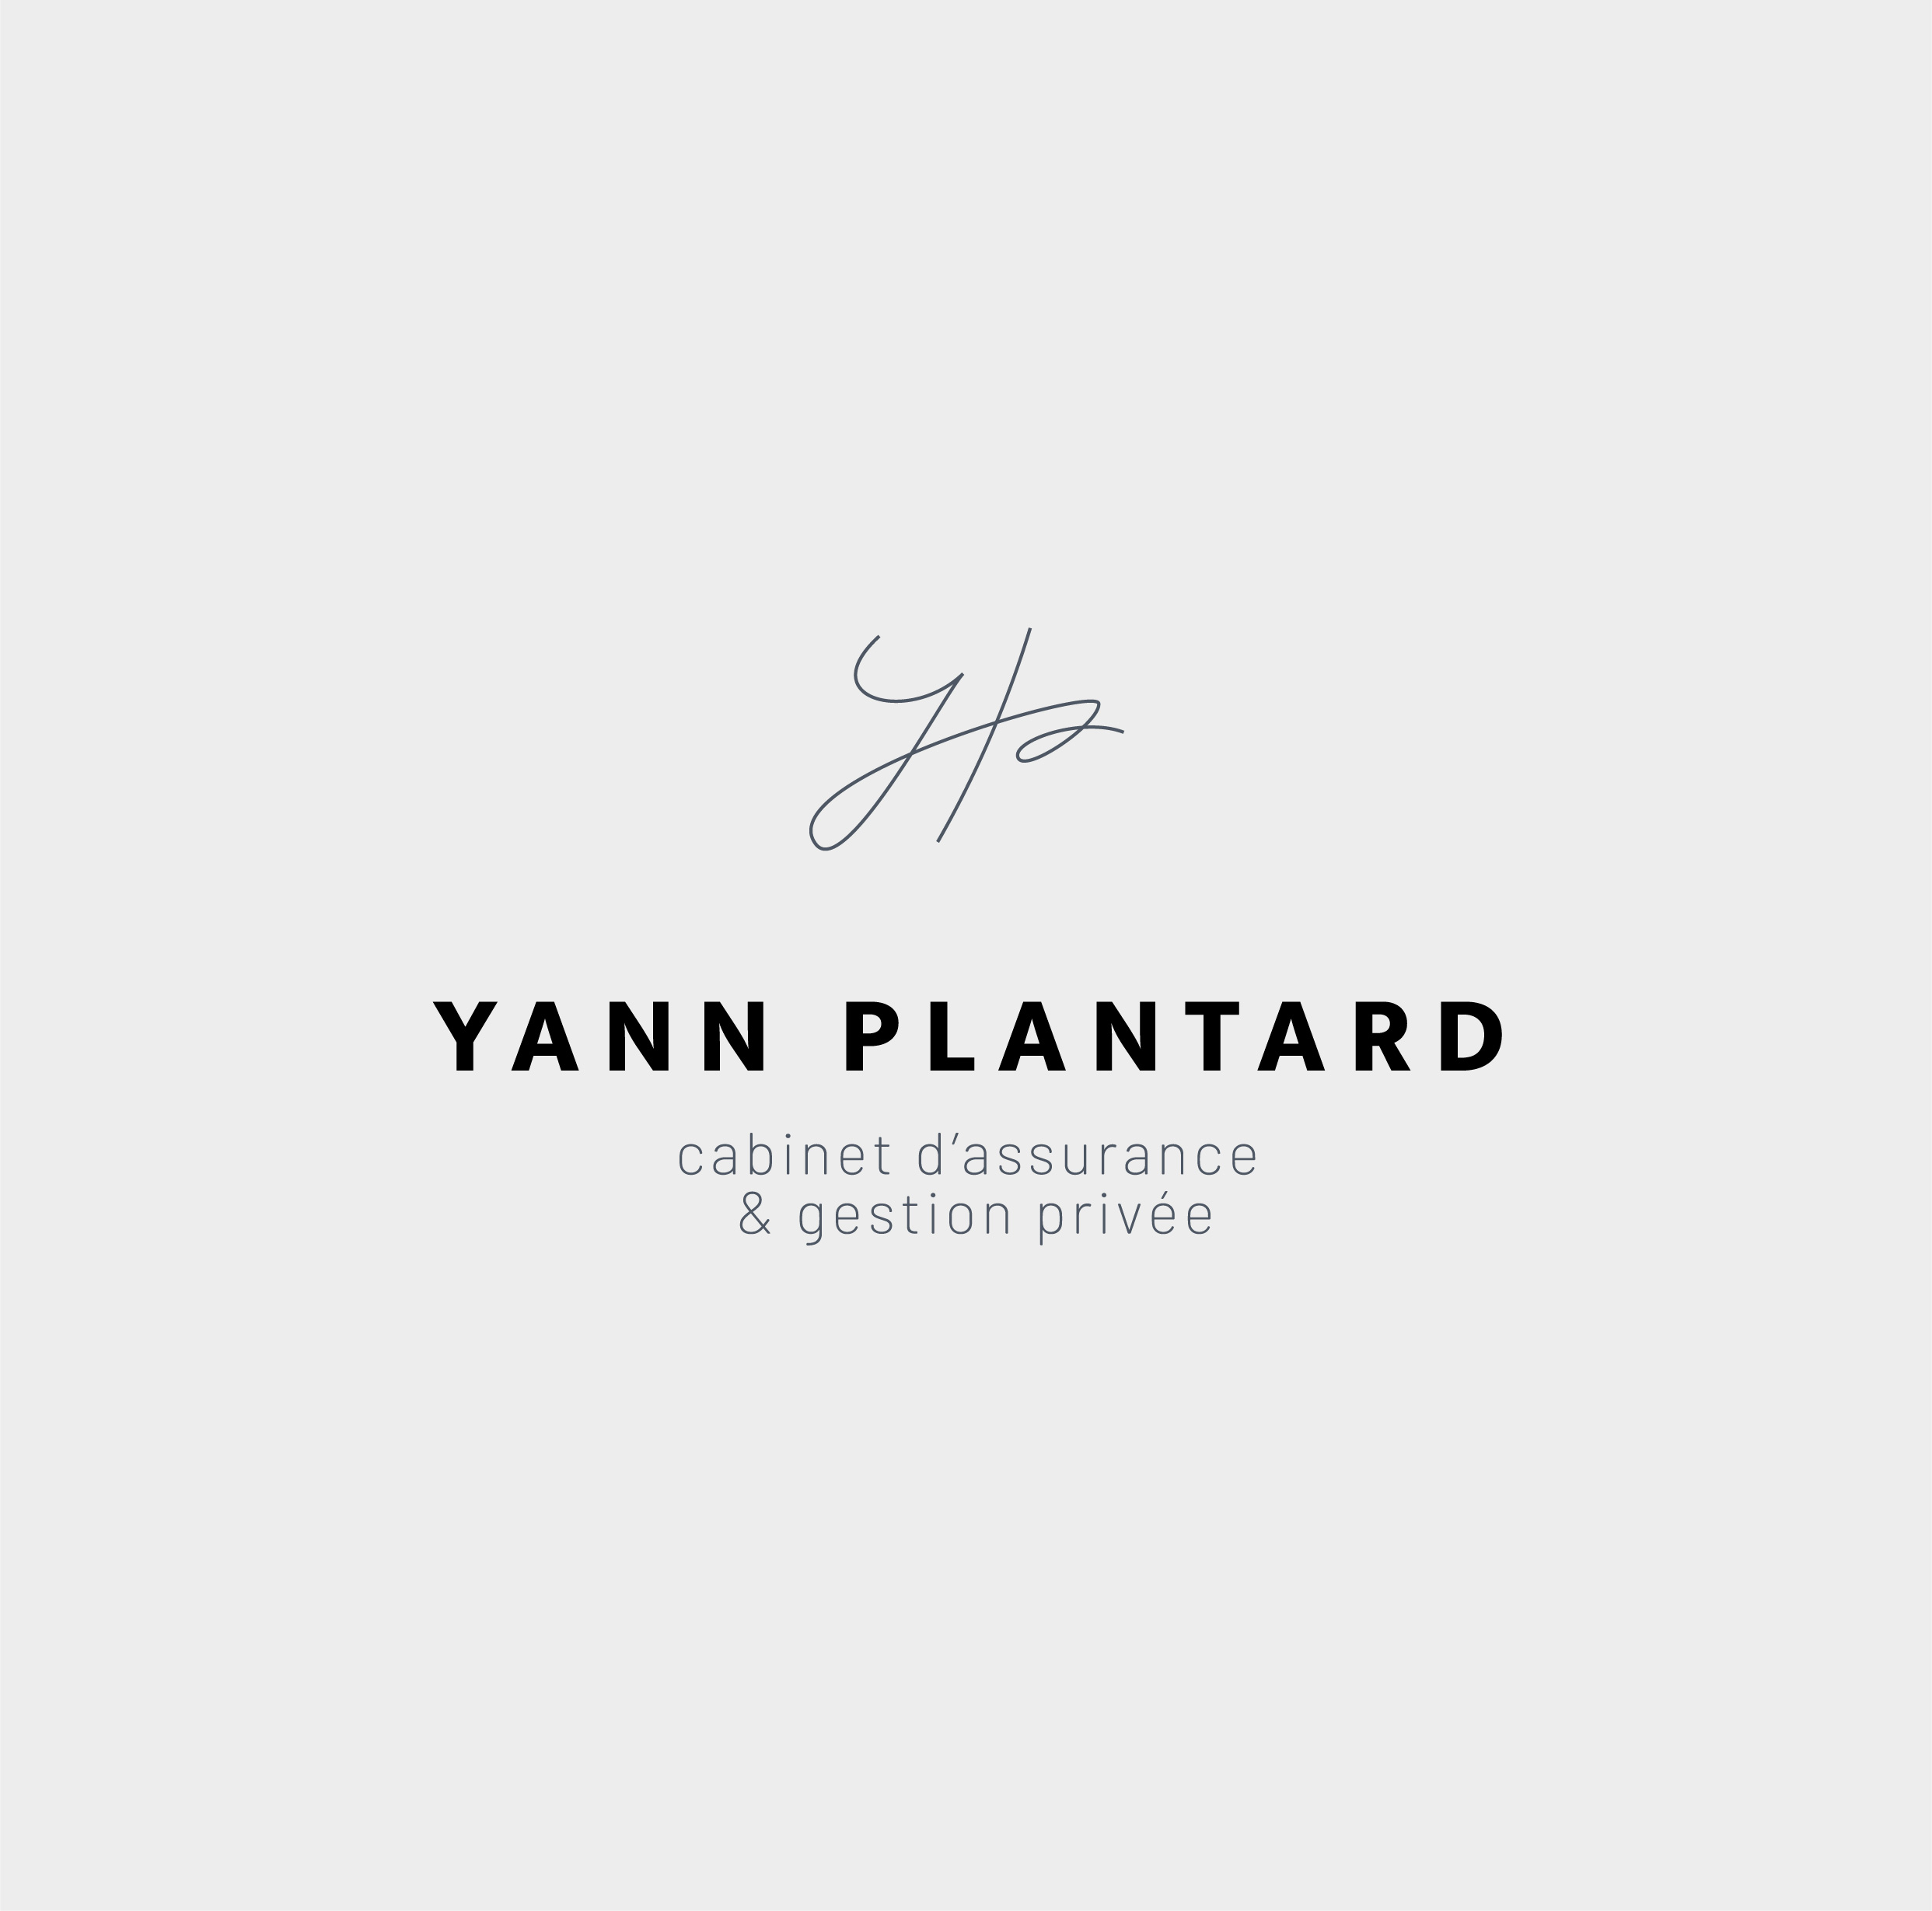 Yann Plantard logo